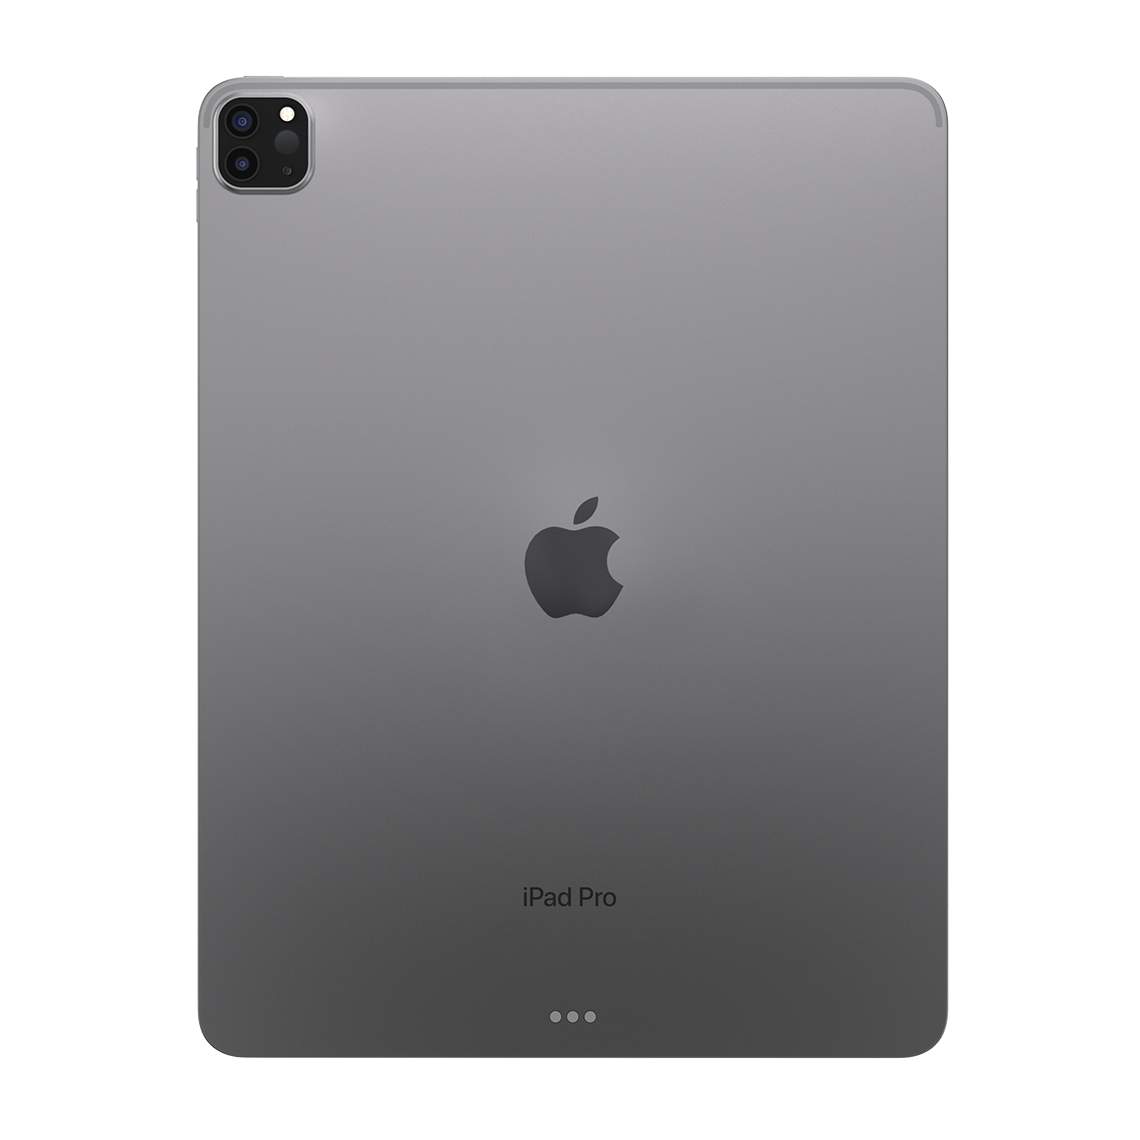 Apple iPad Pro 12.9-inch 6th Generation - Space Gray - 512GB, Wi-Fi + Cellular, Open Box